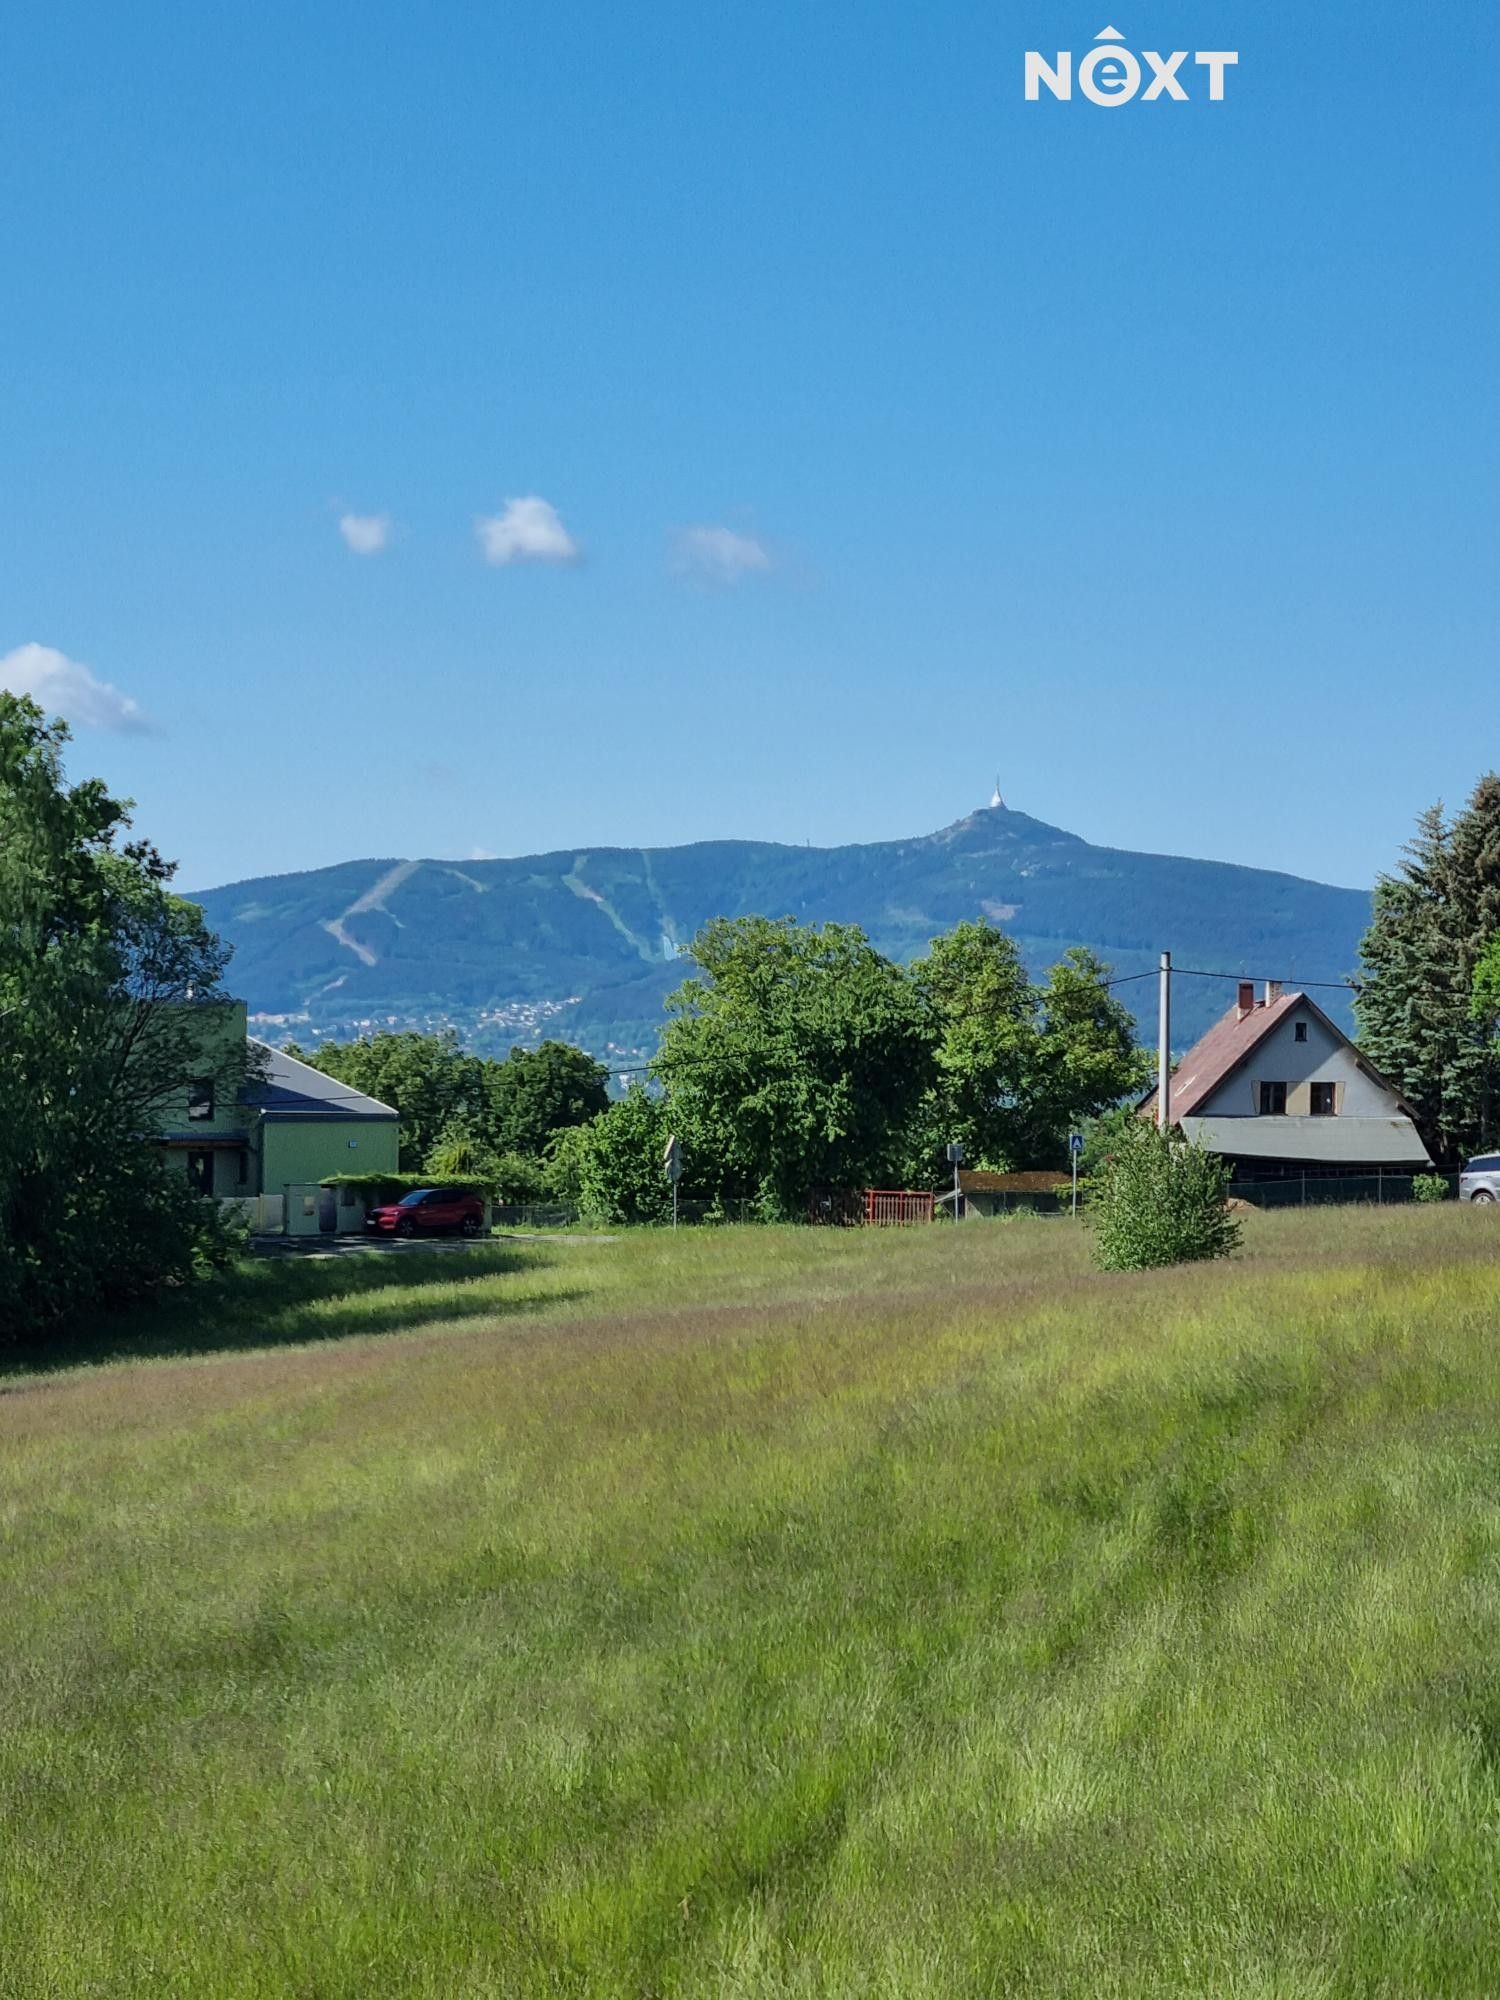 Pozemky pro bydlení, Buková,Liberec XXXII-Radčice,Liberec, 46001, 1 225 m²